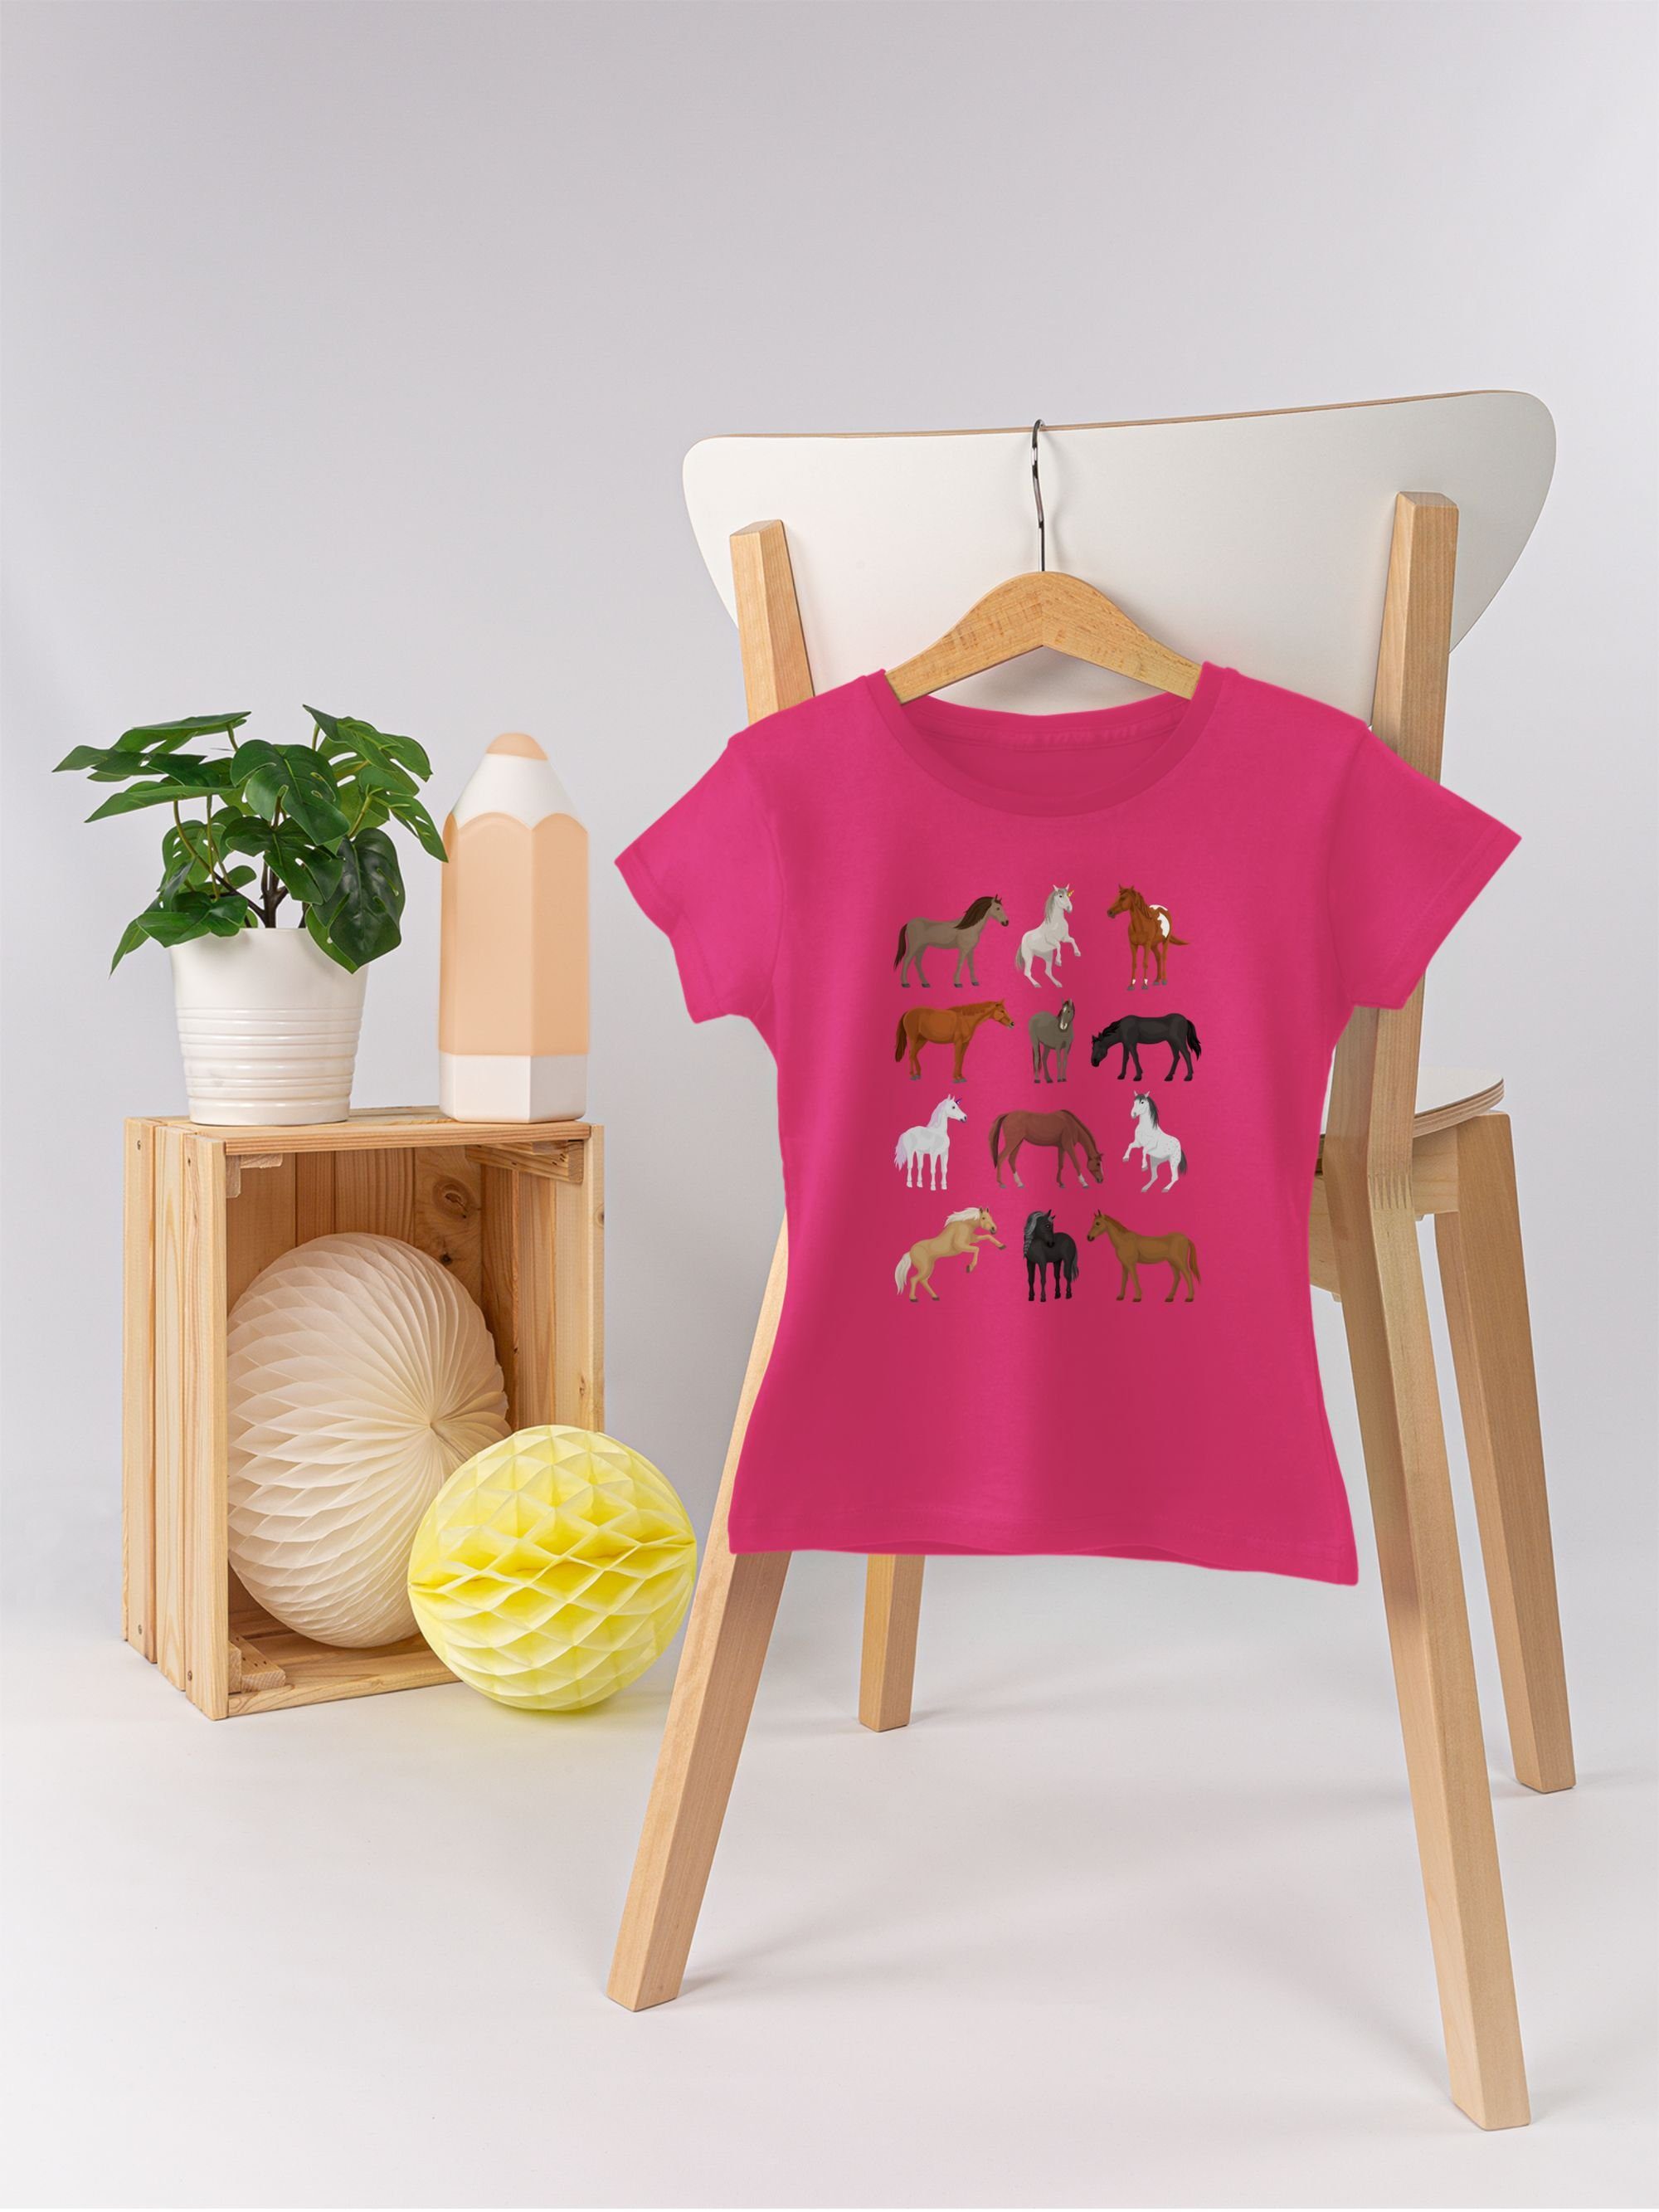 Shirtracer T-Shirt Pferde Fuchsia Print Tiermotiv Animal Reihe 2